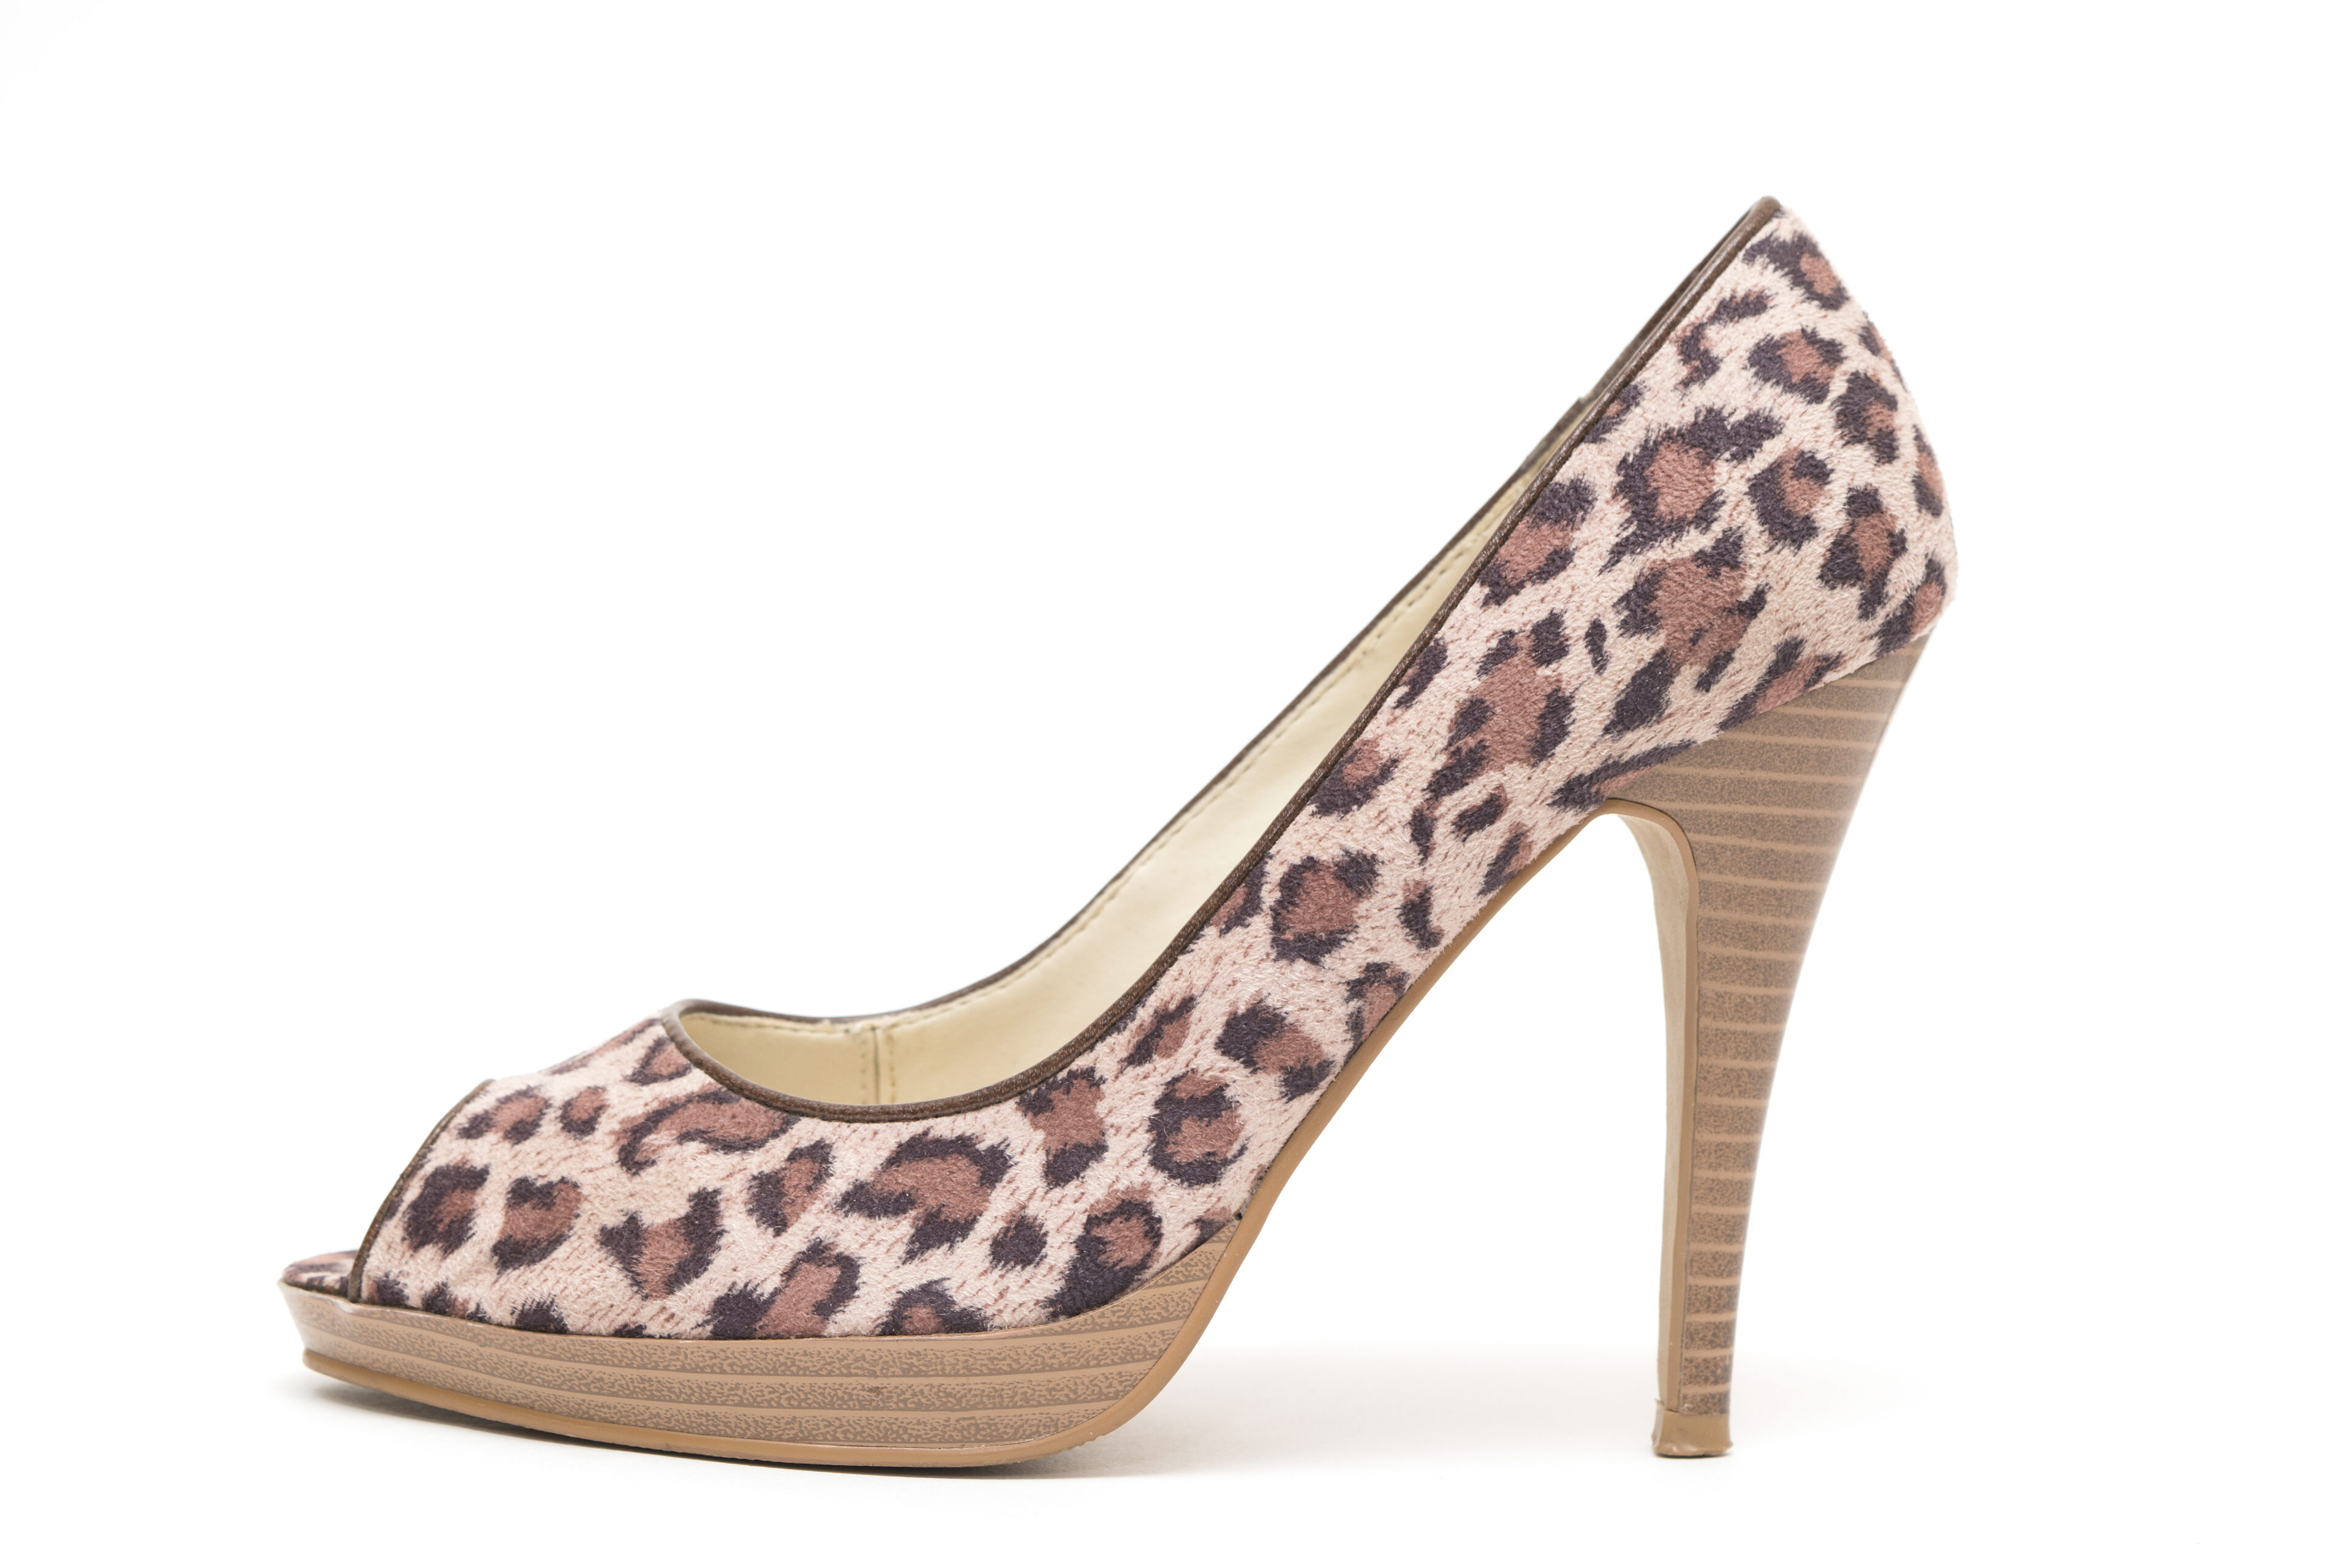  Leopard Print Open-toe Shoes